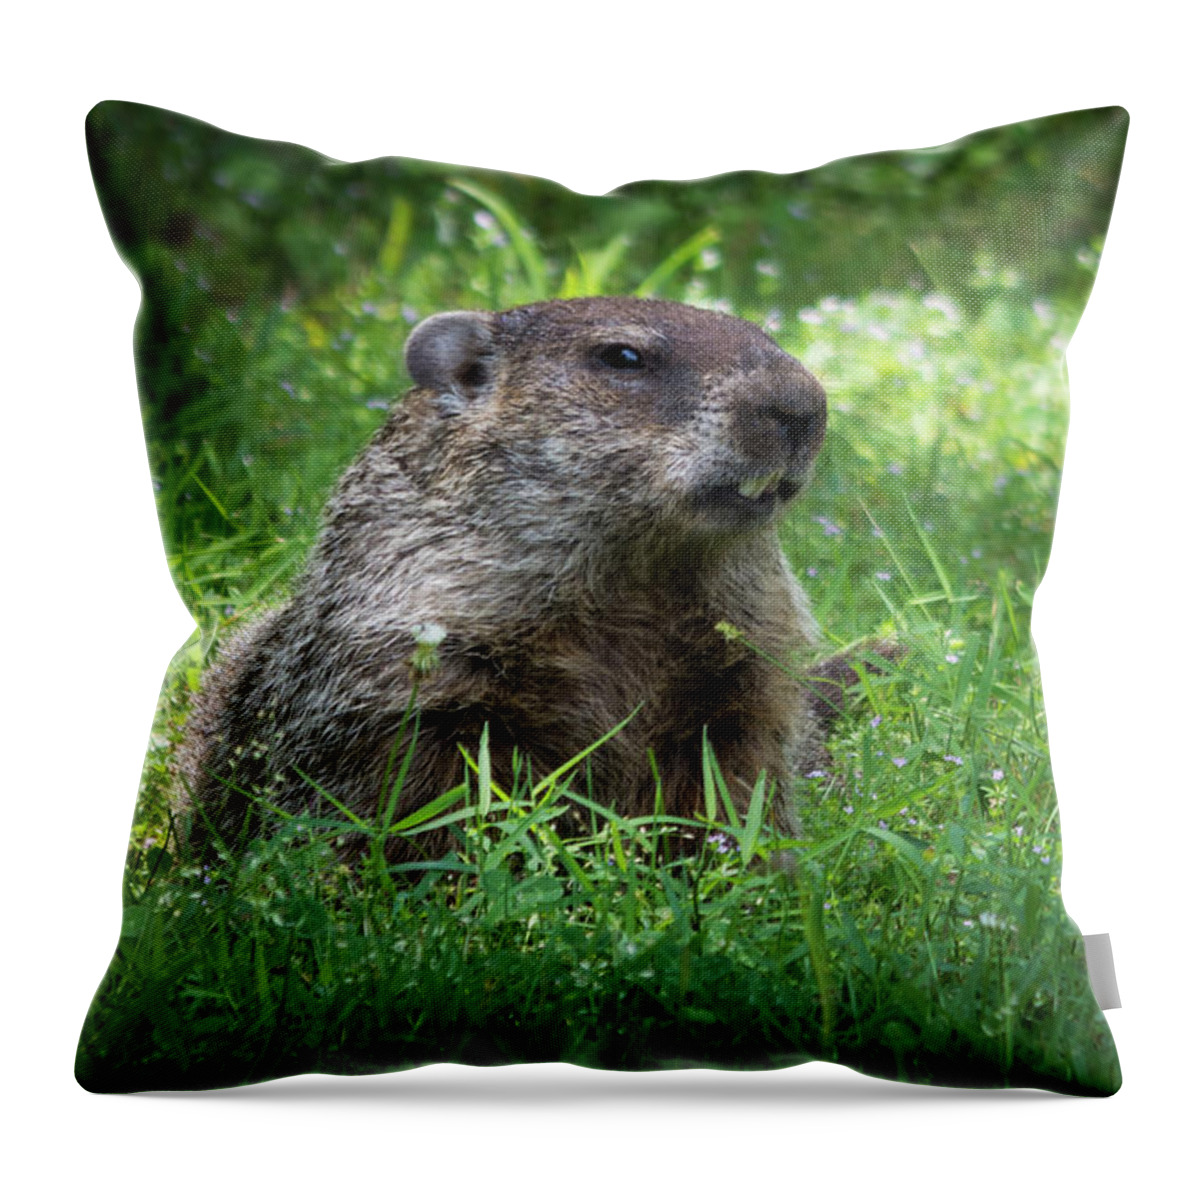 Wildlife Throw Pillow featuring the photograph Groundhog Posing by John Benedict